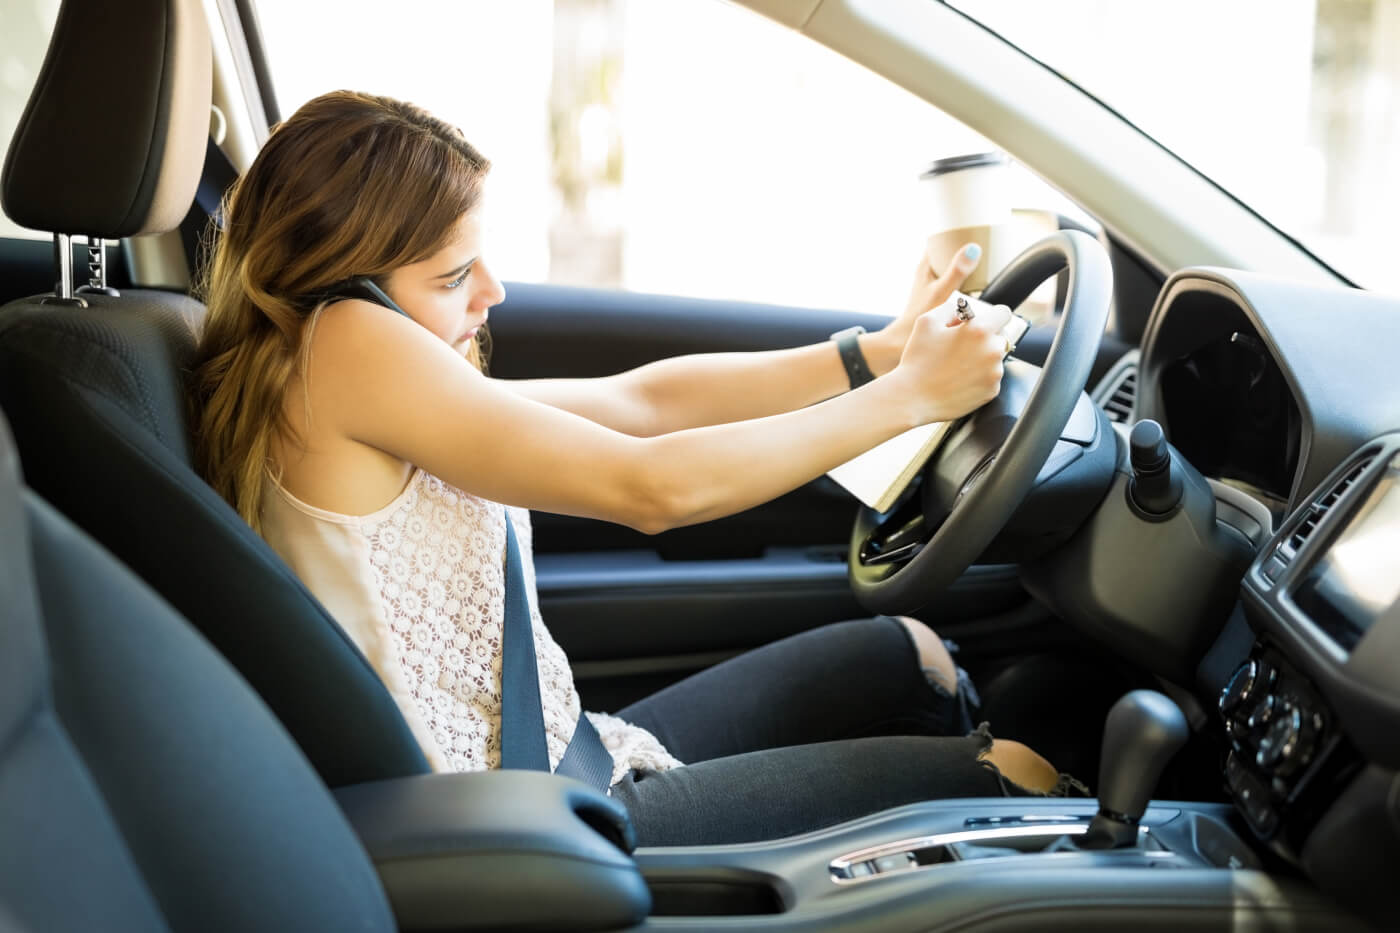 Aggravating Factors for Dangerous Driving